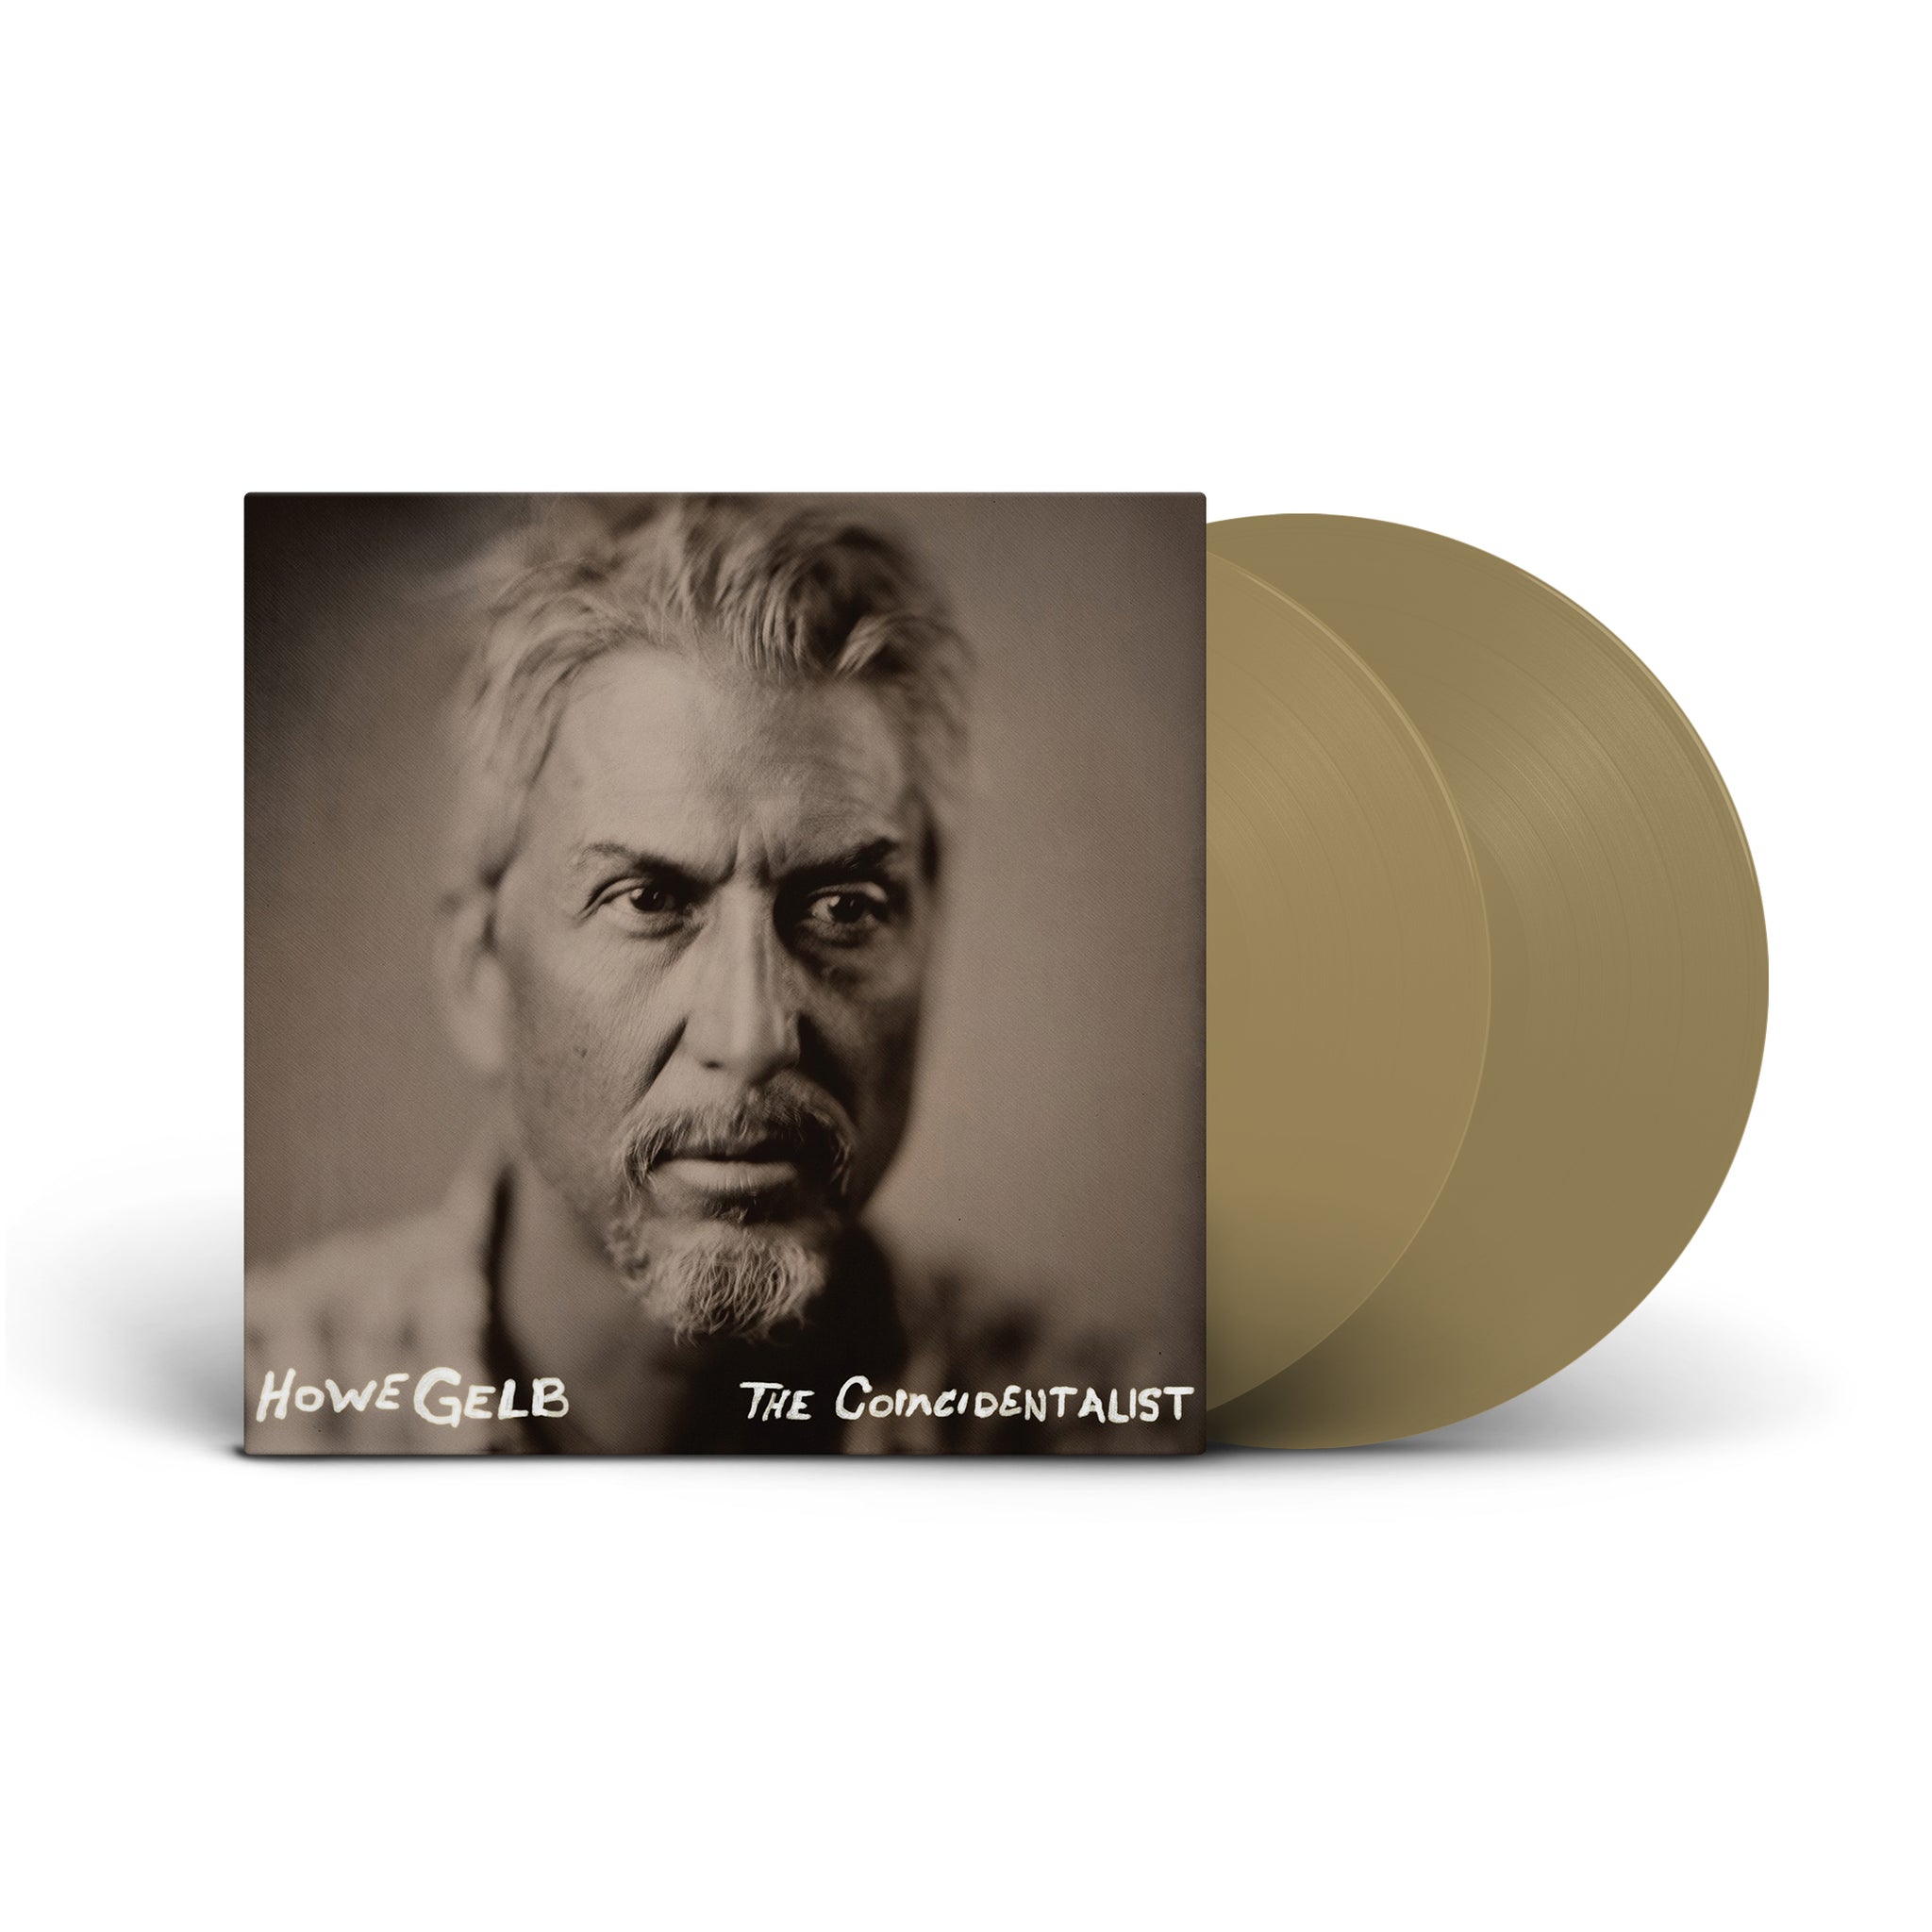 HOWE GELB - The Coincidentalist & Dust Bowl - 2LP - Gold Vinyl